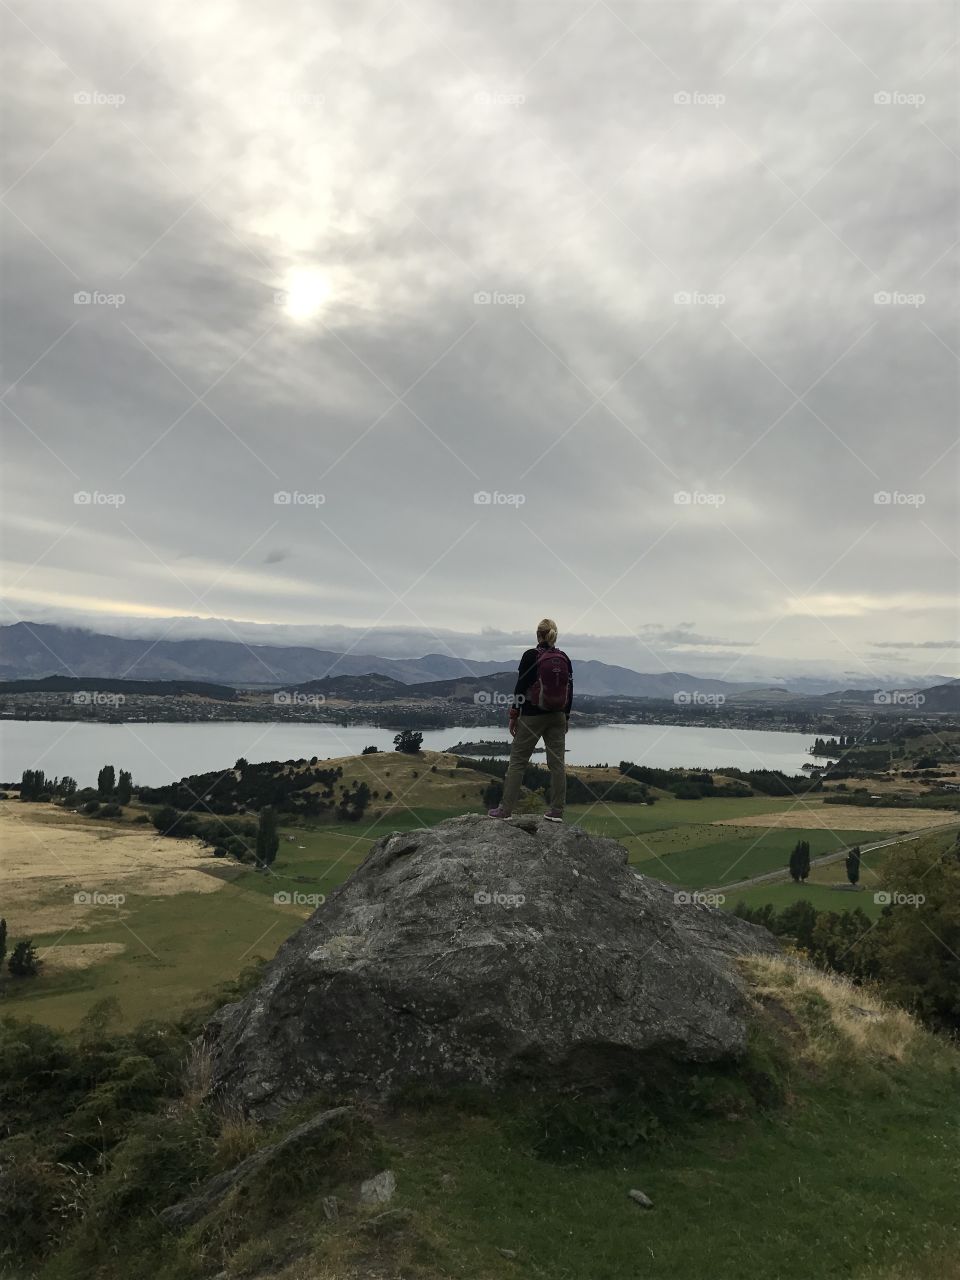 Roy's peak, New Zealand, February 2017 